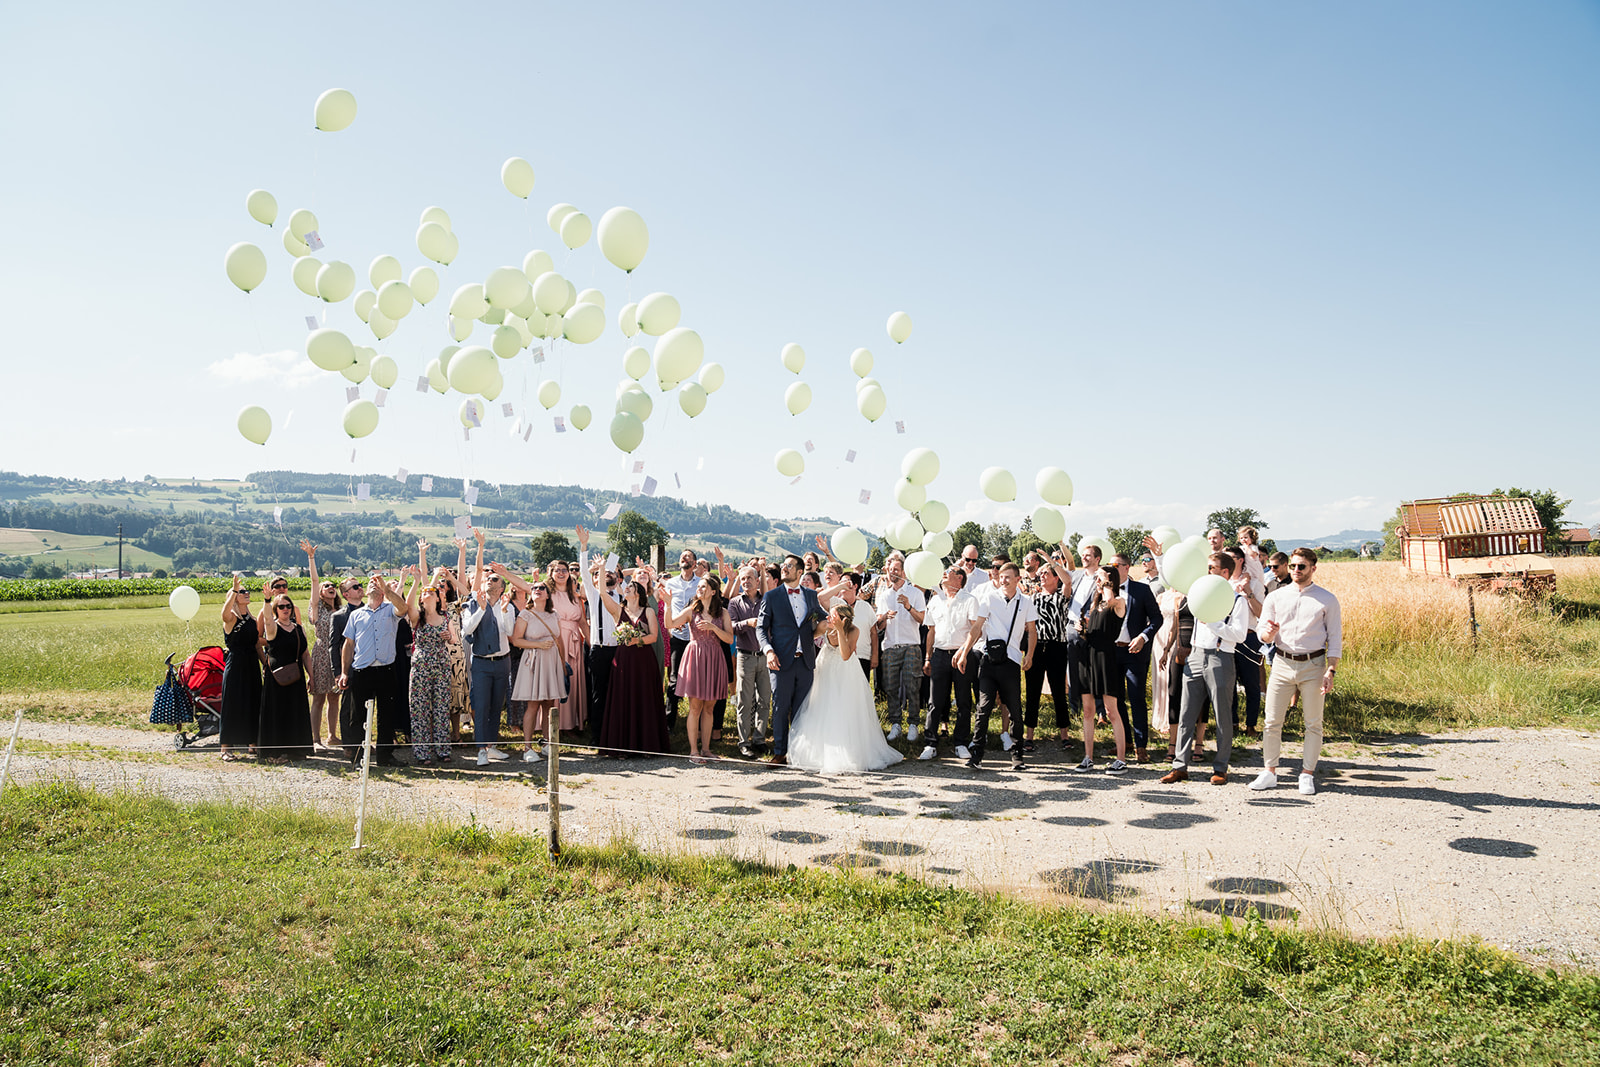 Hochzeitsgesellschaft Ballone steigen